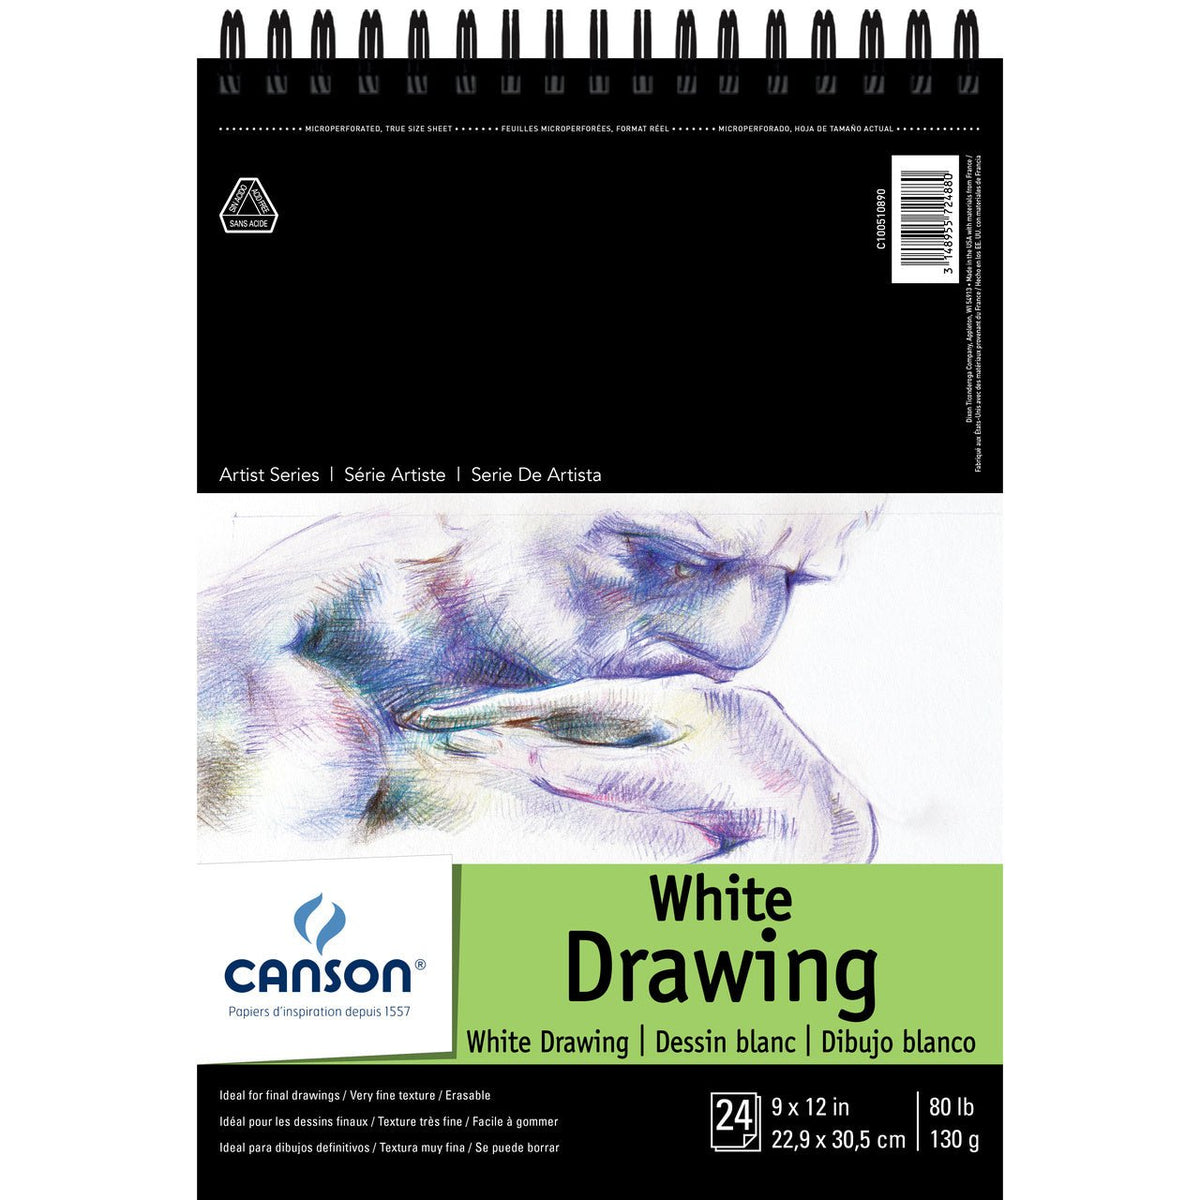 2- Canson XL Series Watercolor Textured Paper Pad 9 x 12 - 30-Sheets  140lb e/a